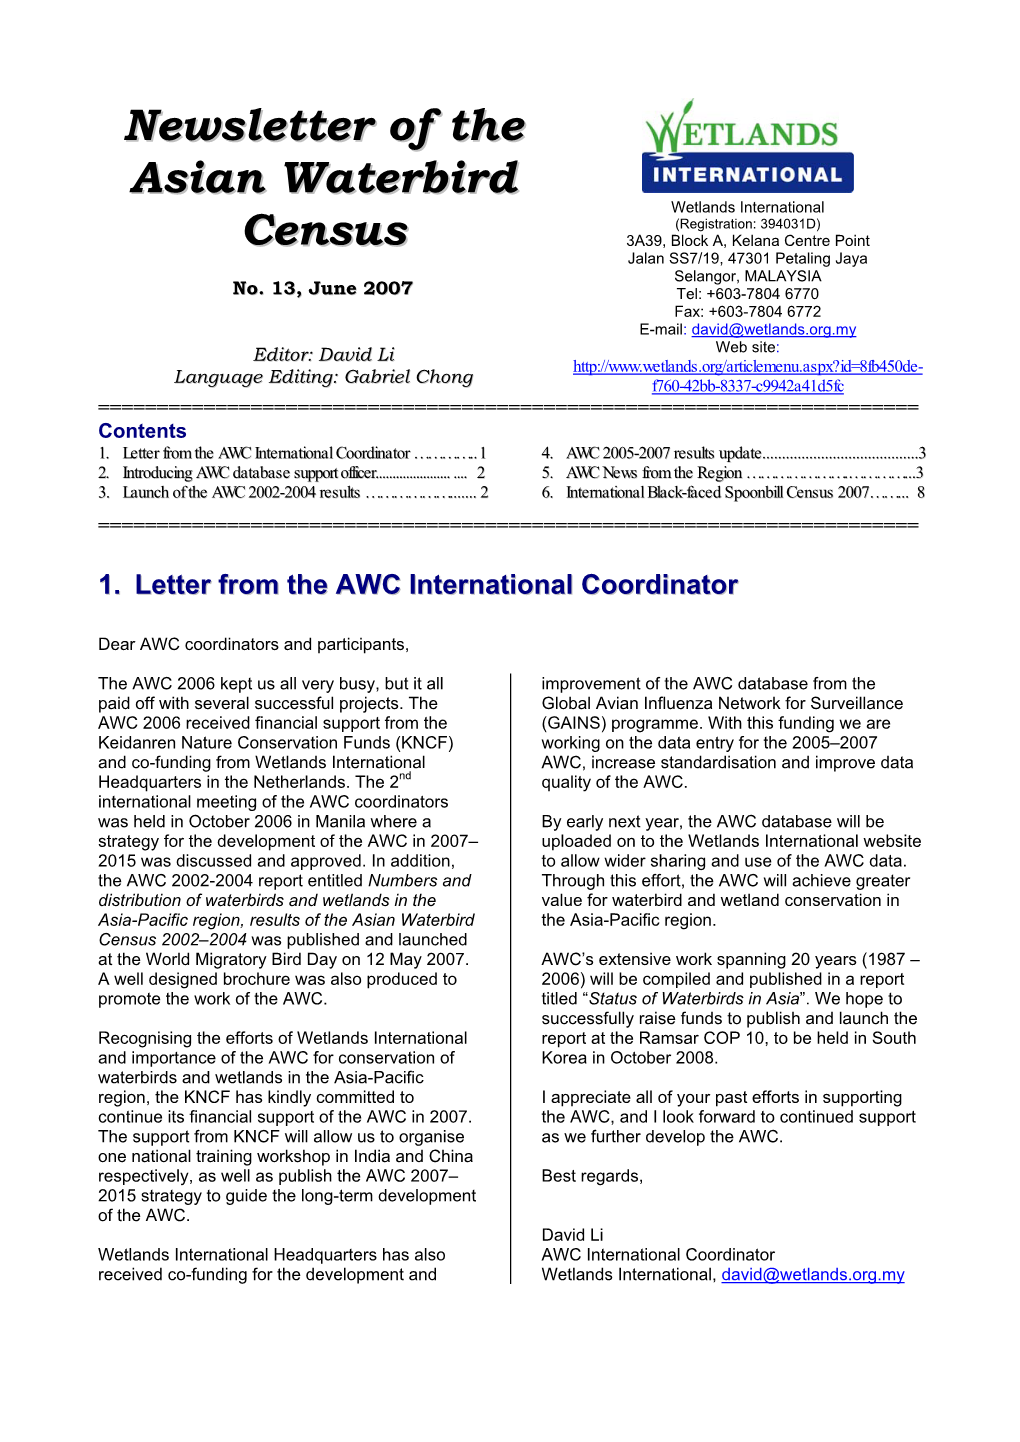 AWC Newsletter, June 2007